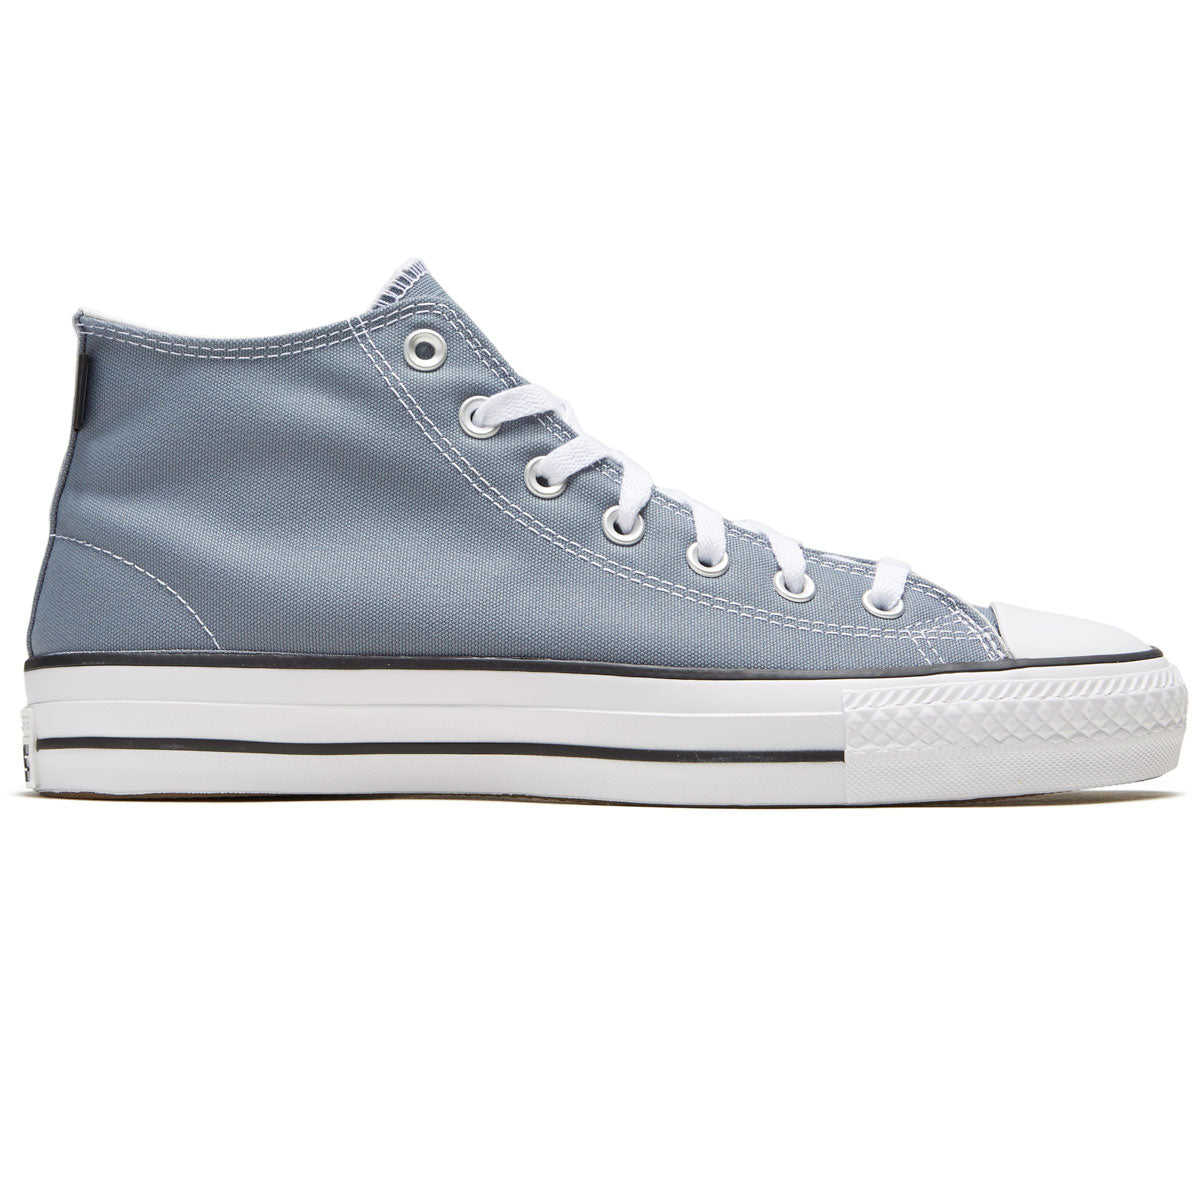 Converse Chuck Taylor All Star Pro Mid Shoes Lunar Grey/White/Black – CCS